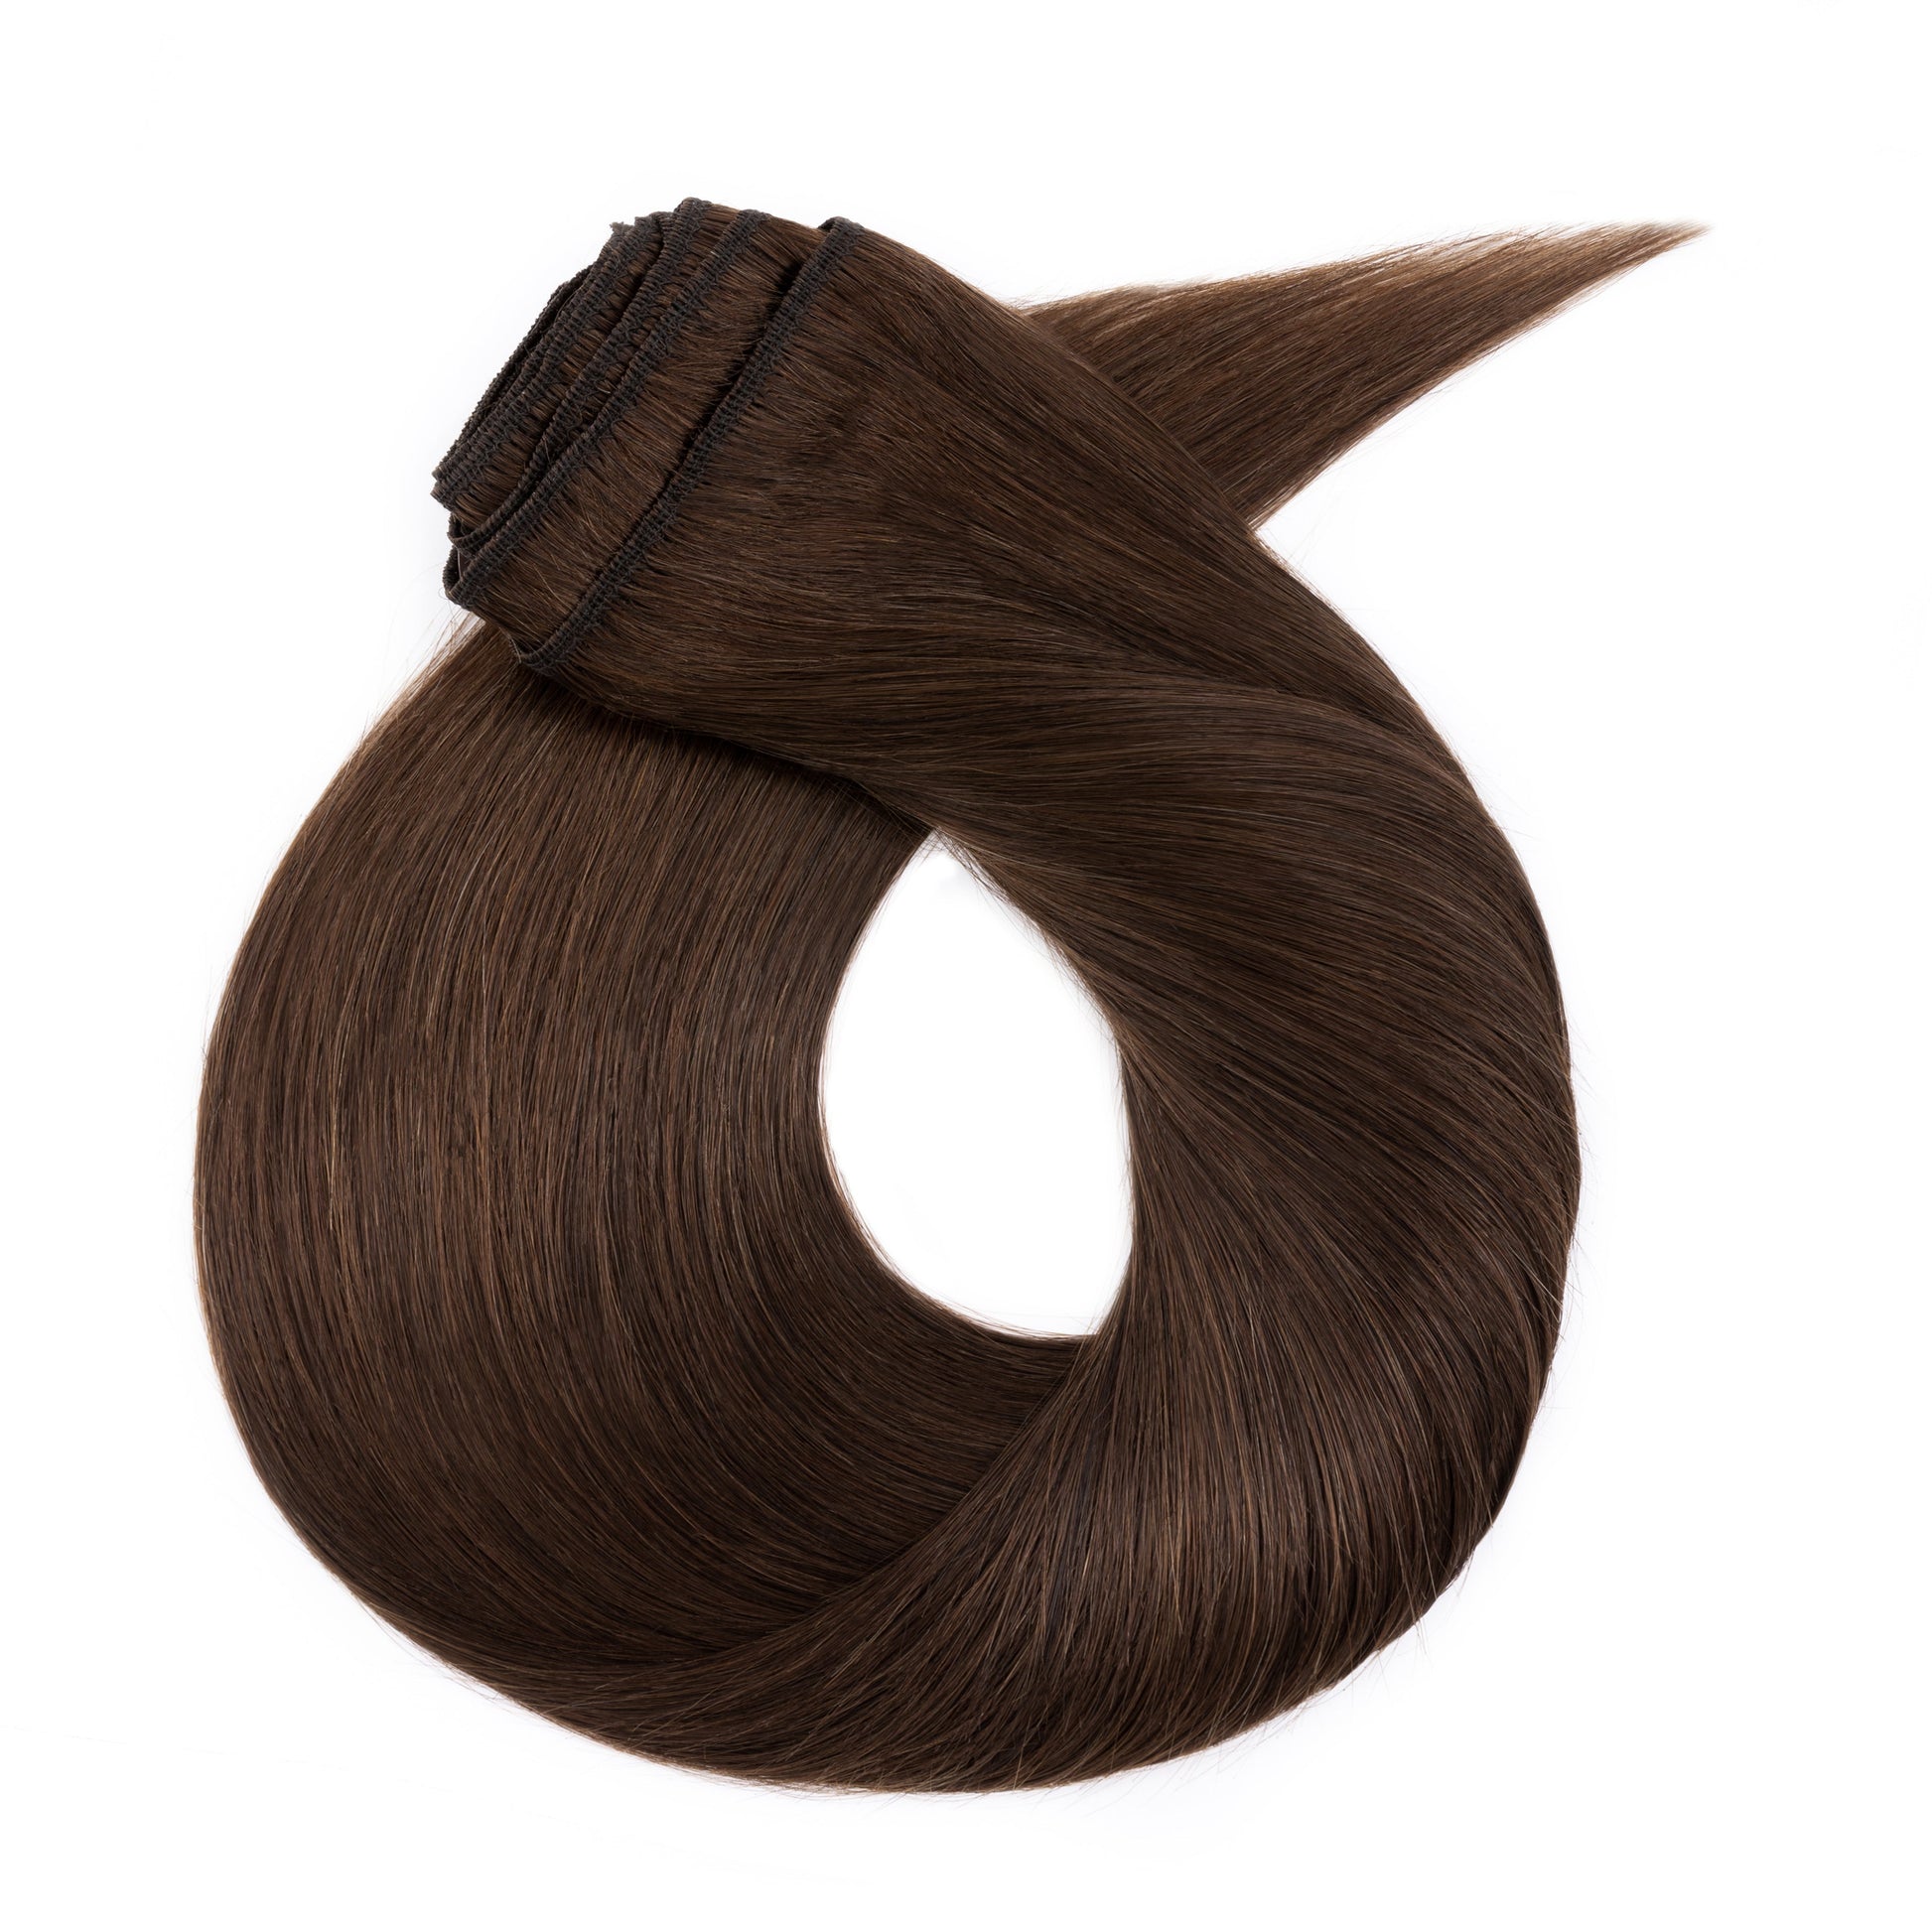 SEGOHAIR Clip In Hair Extensions Real Human Hair Light Weight Chocolate Brown segohair.com